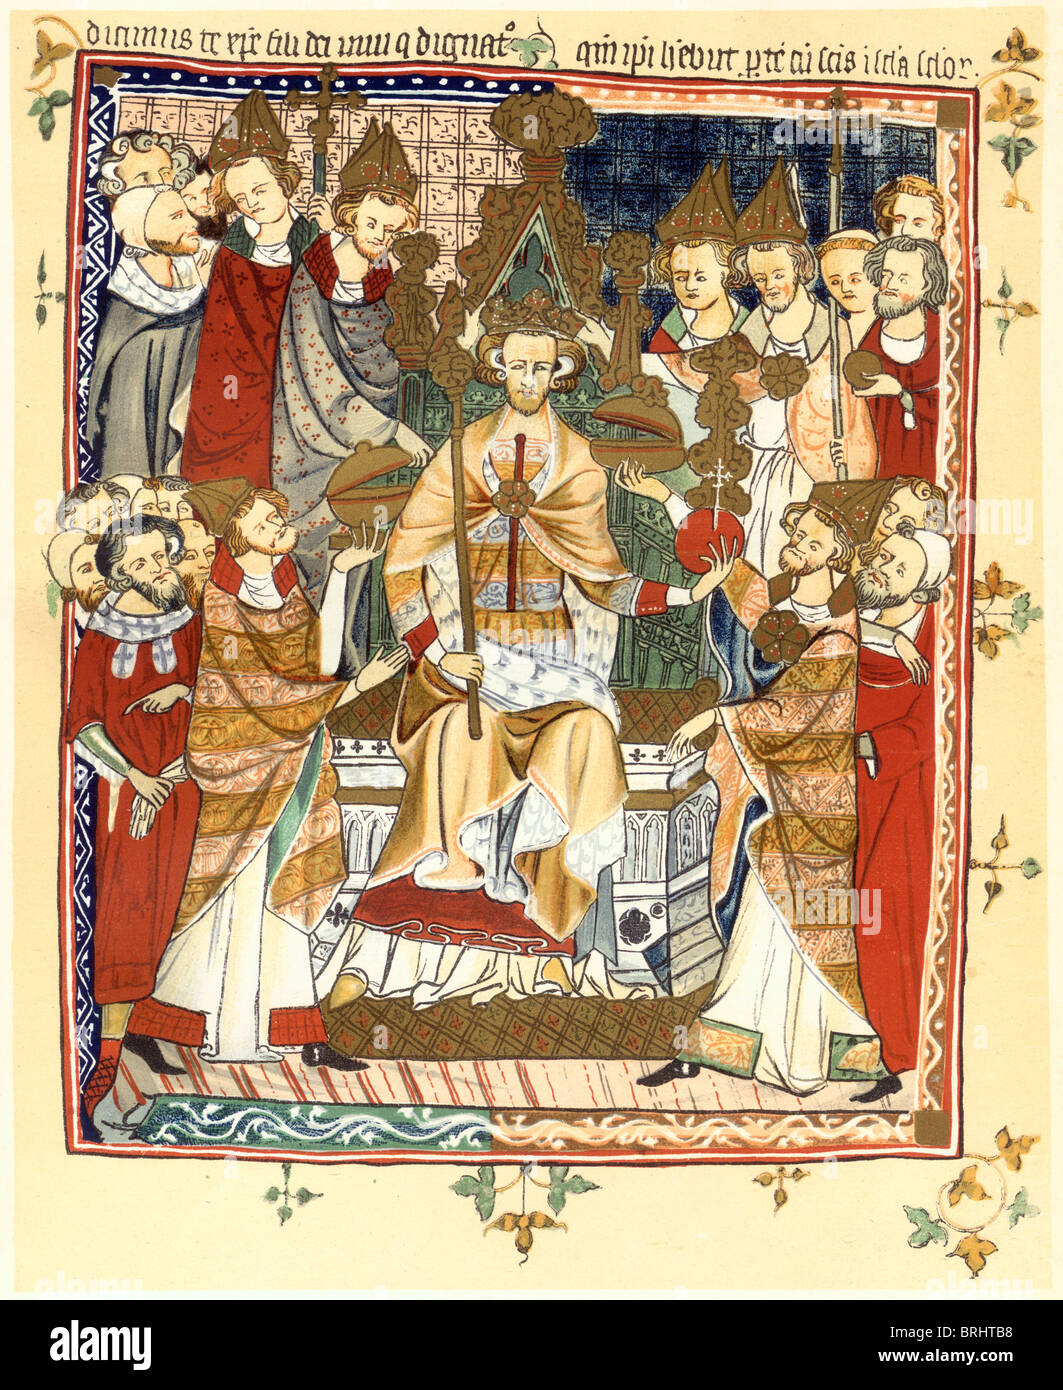 Farbe Abbildung; 14. Jahrhundert Krönung eines Königs aus dem Manuskript im Corpus Christi College in Cambridge Stockfoto